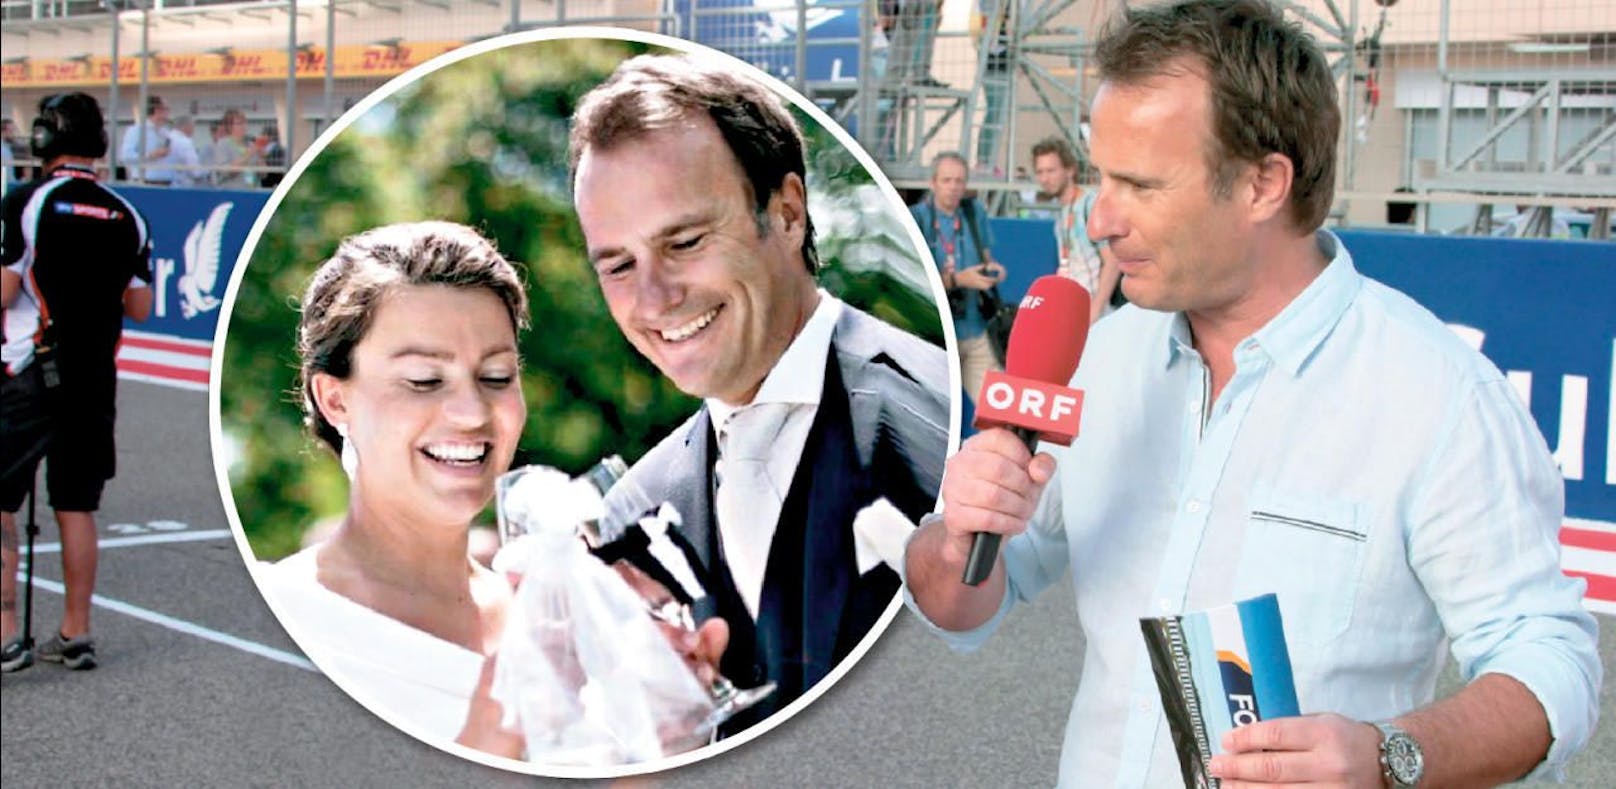 Heirat! ORF-Reporter Hausleitner ist in der Box